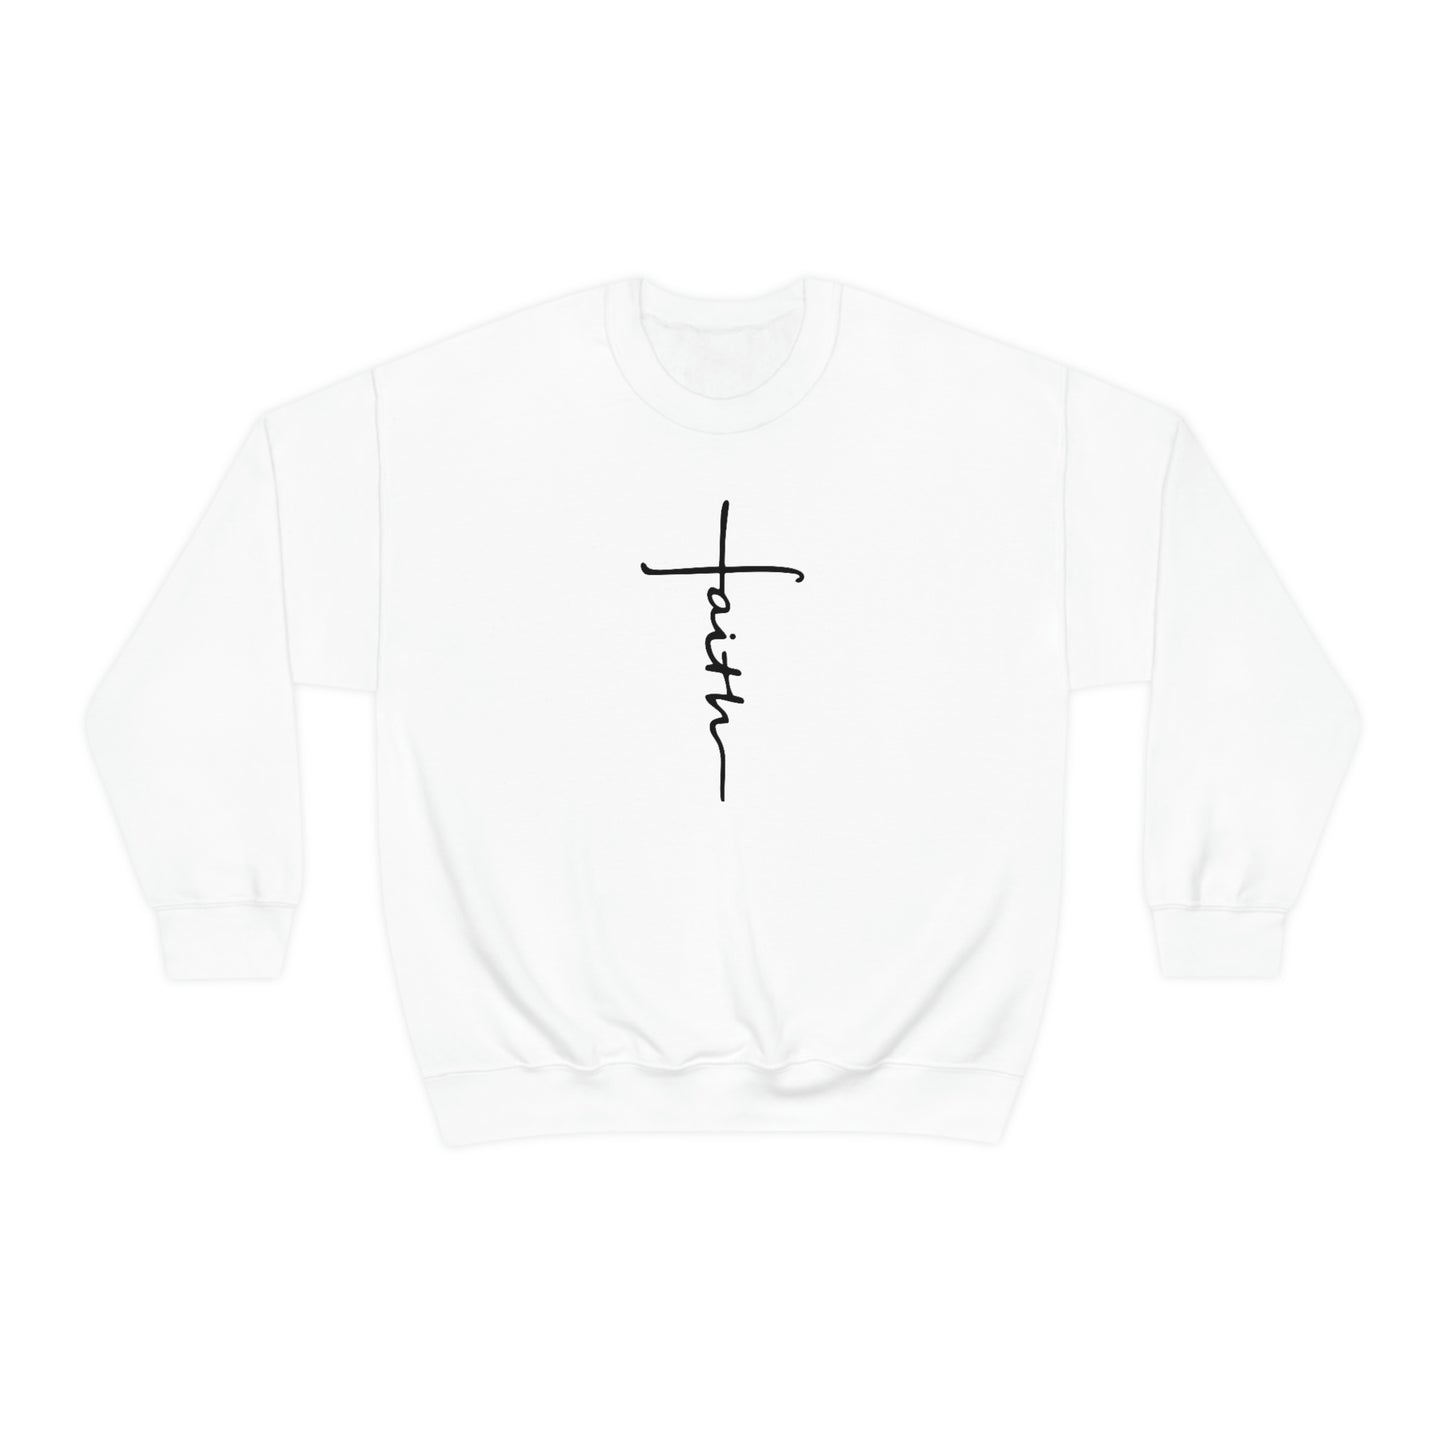 "Faith" Unisex Crewneck Sweatshirt